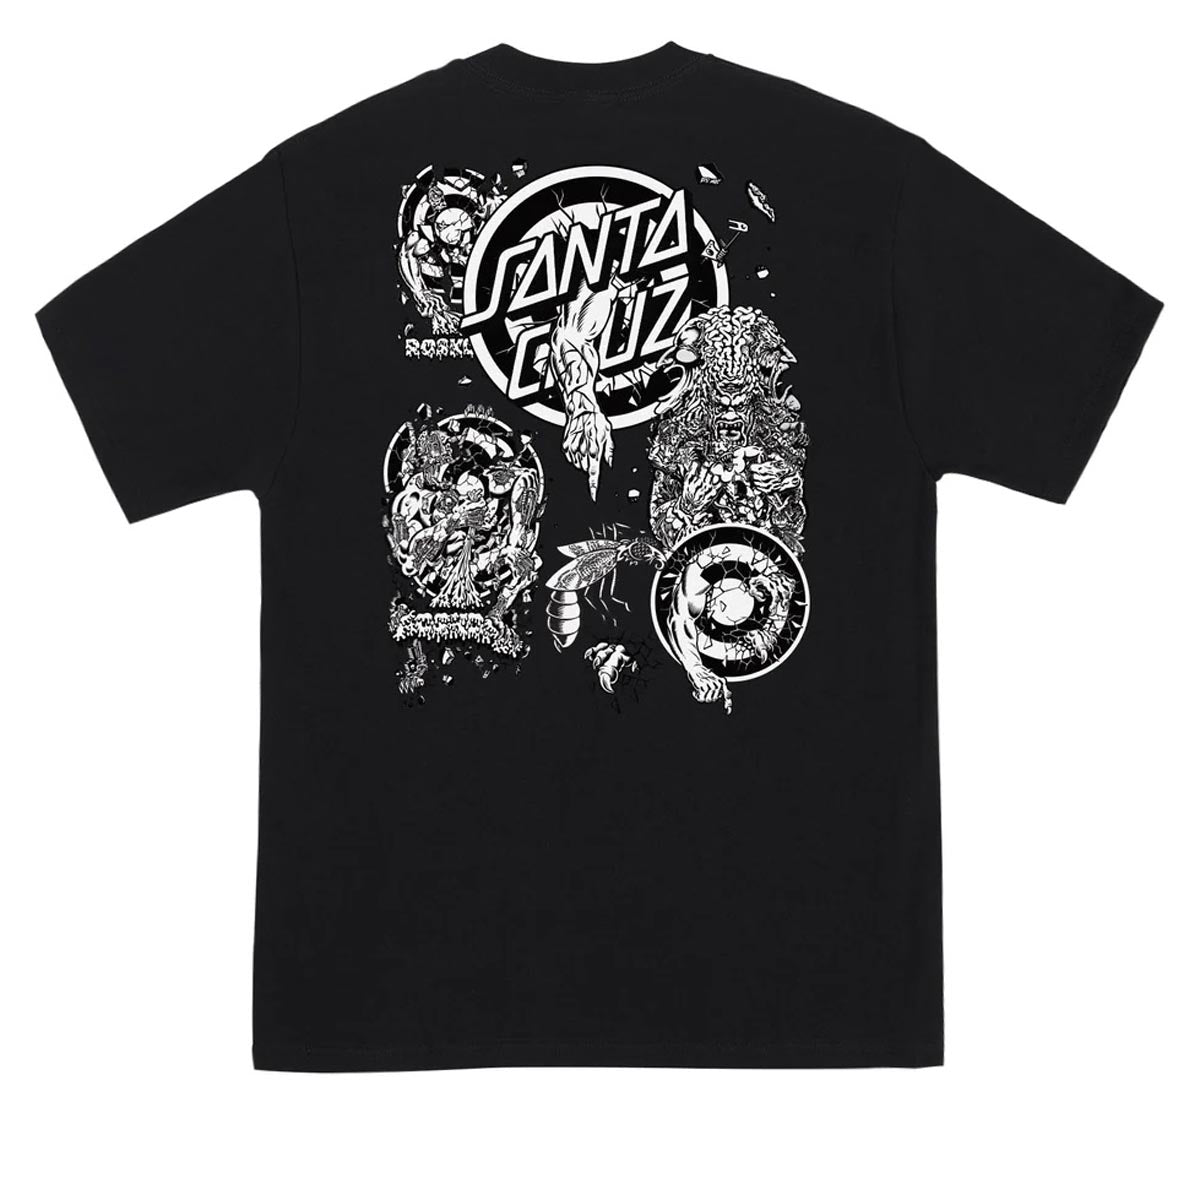 Santa Cruz Roskopp Evo 2 T-Shirt - Black image 1